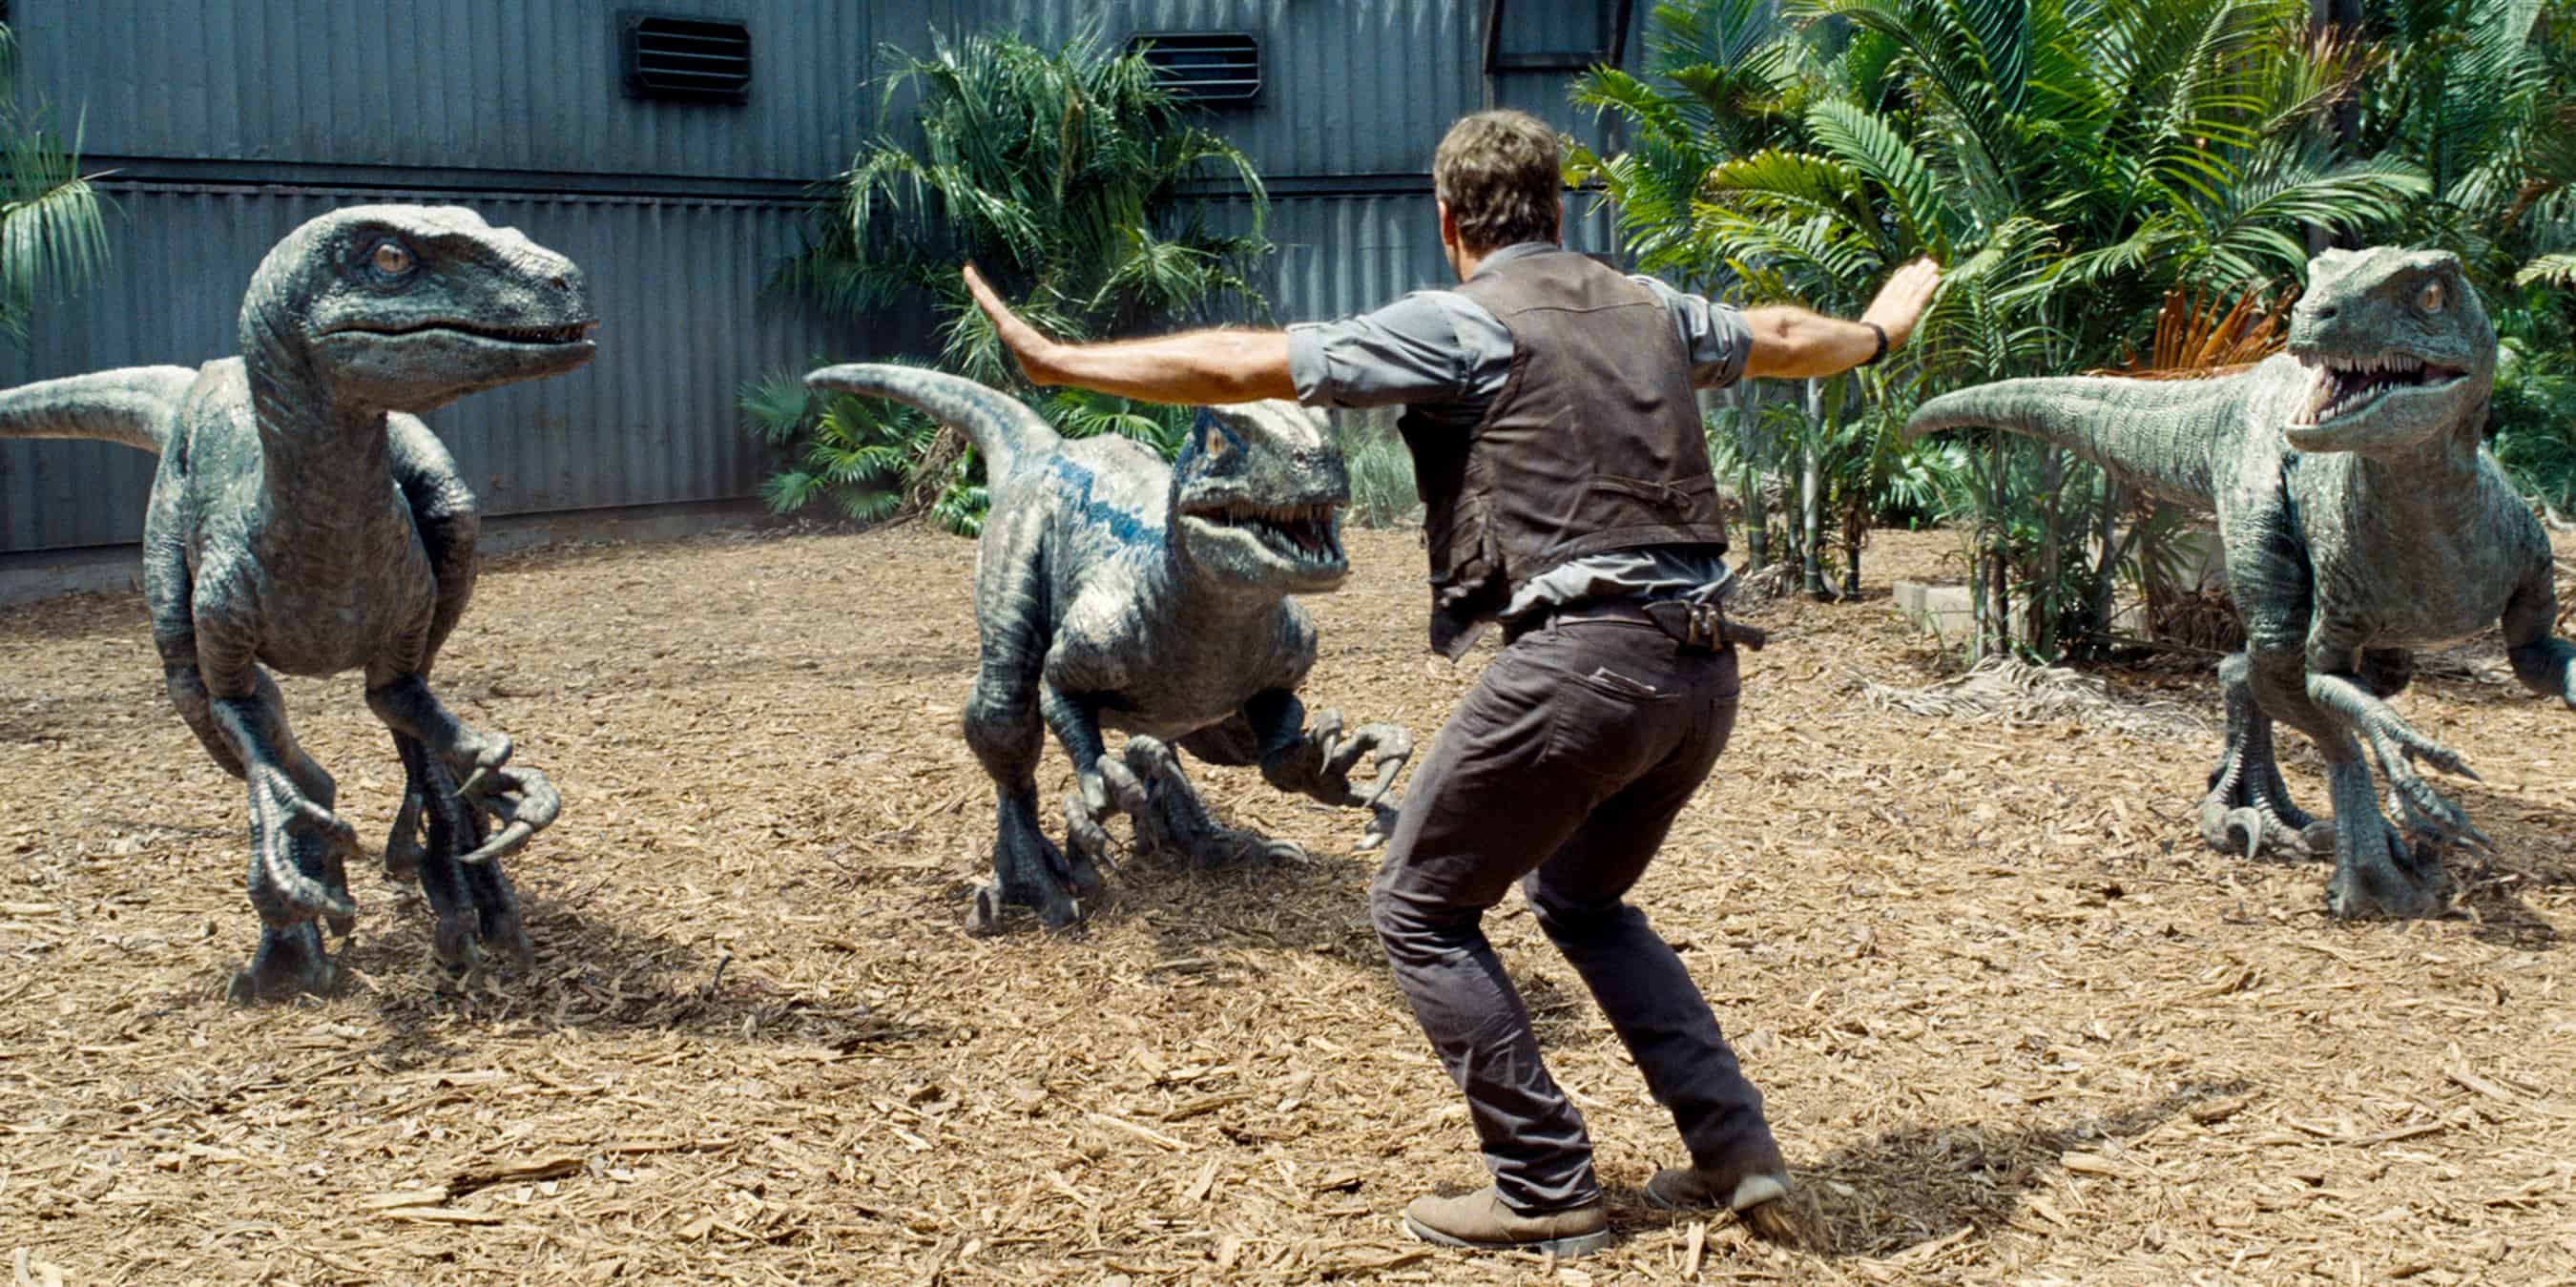 Actor Chris Pratt is surrounded by raptors in 